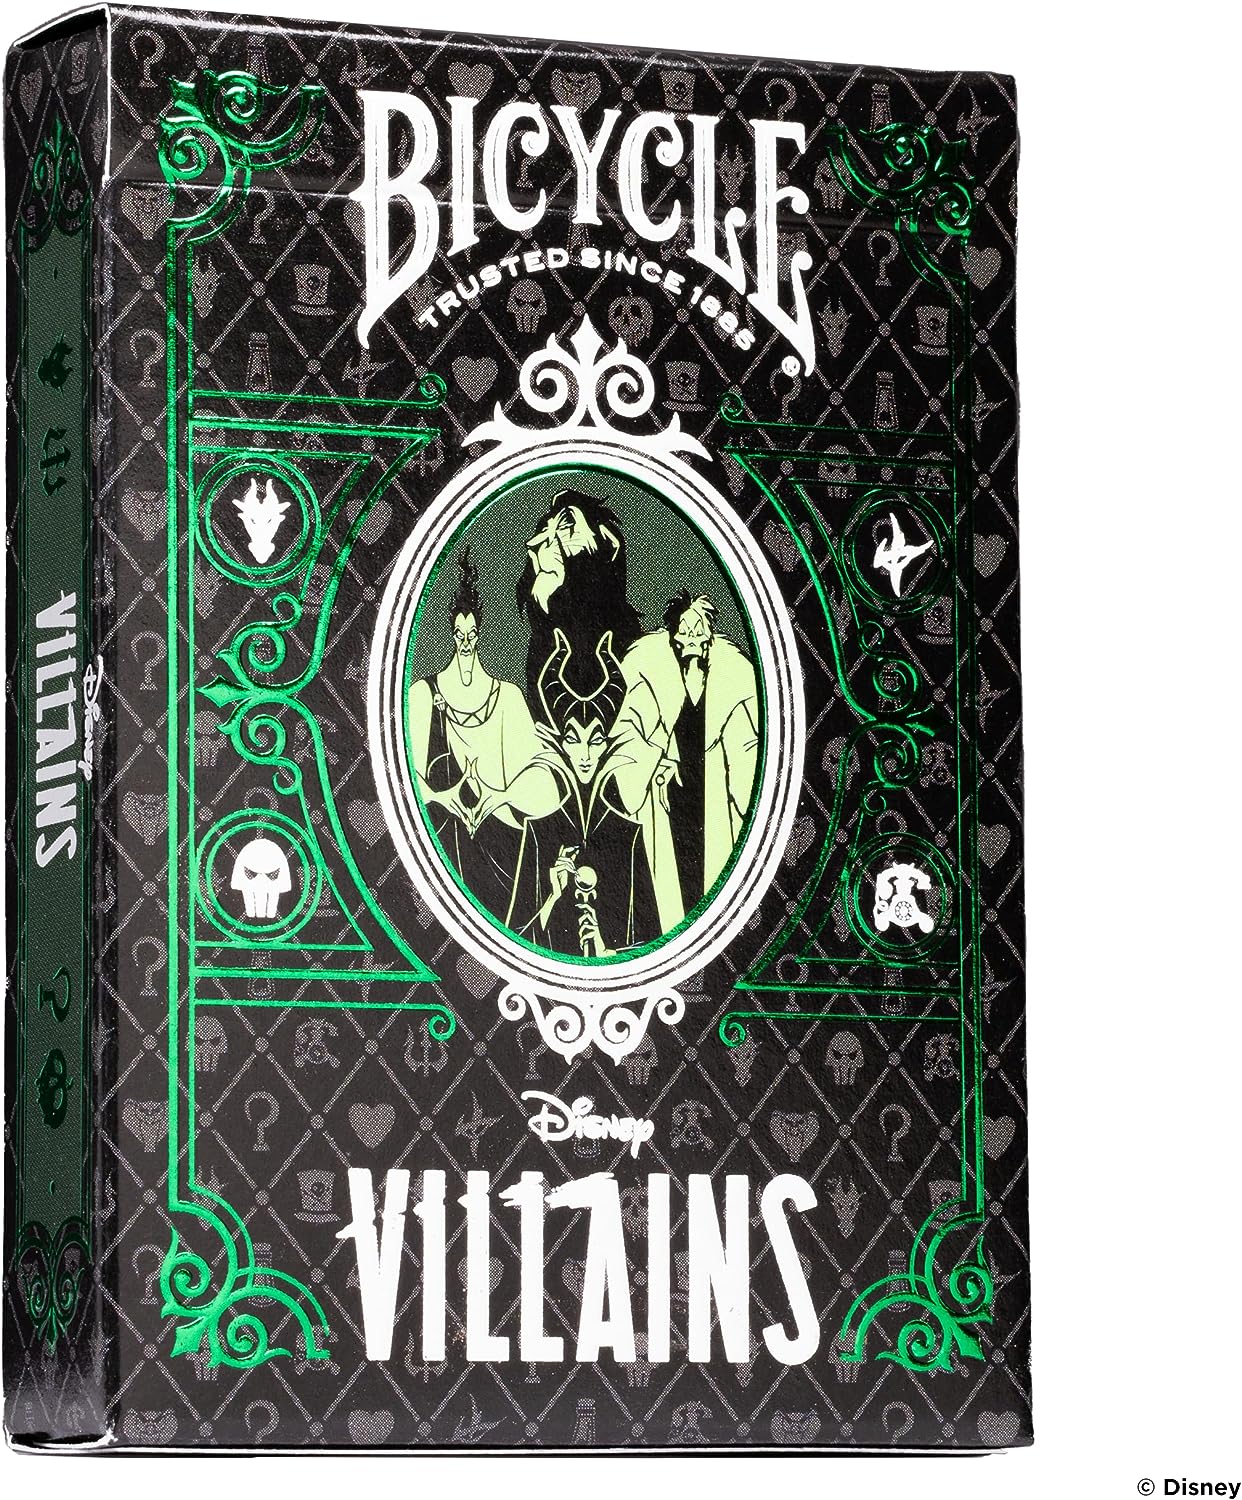 Bicycle - Bicycle Playing Cards: Disney Villains: Green #10039960 